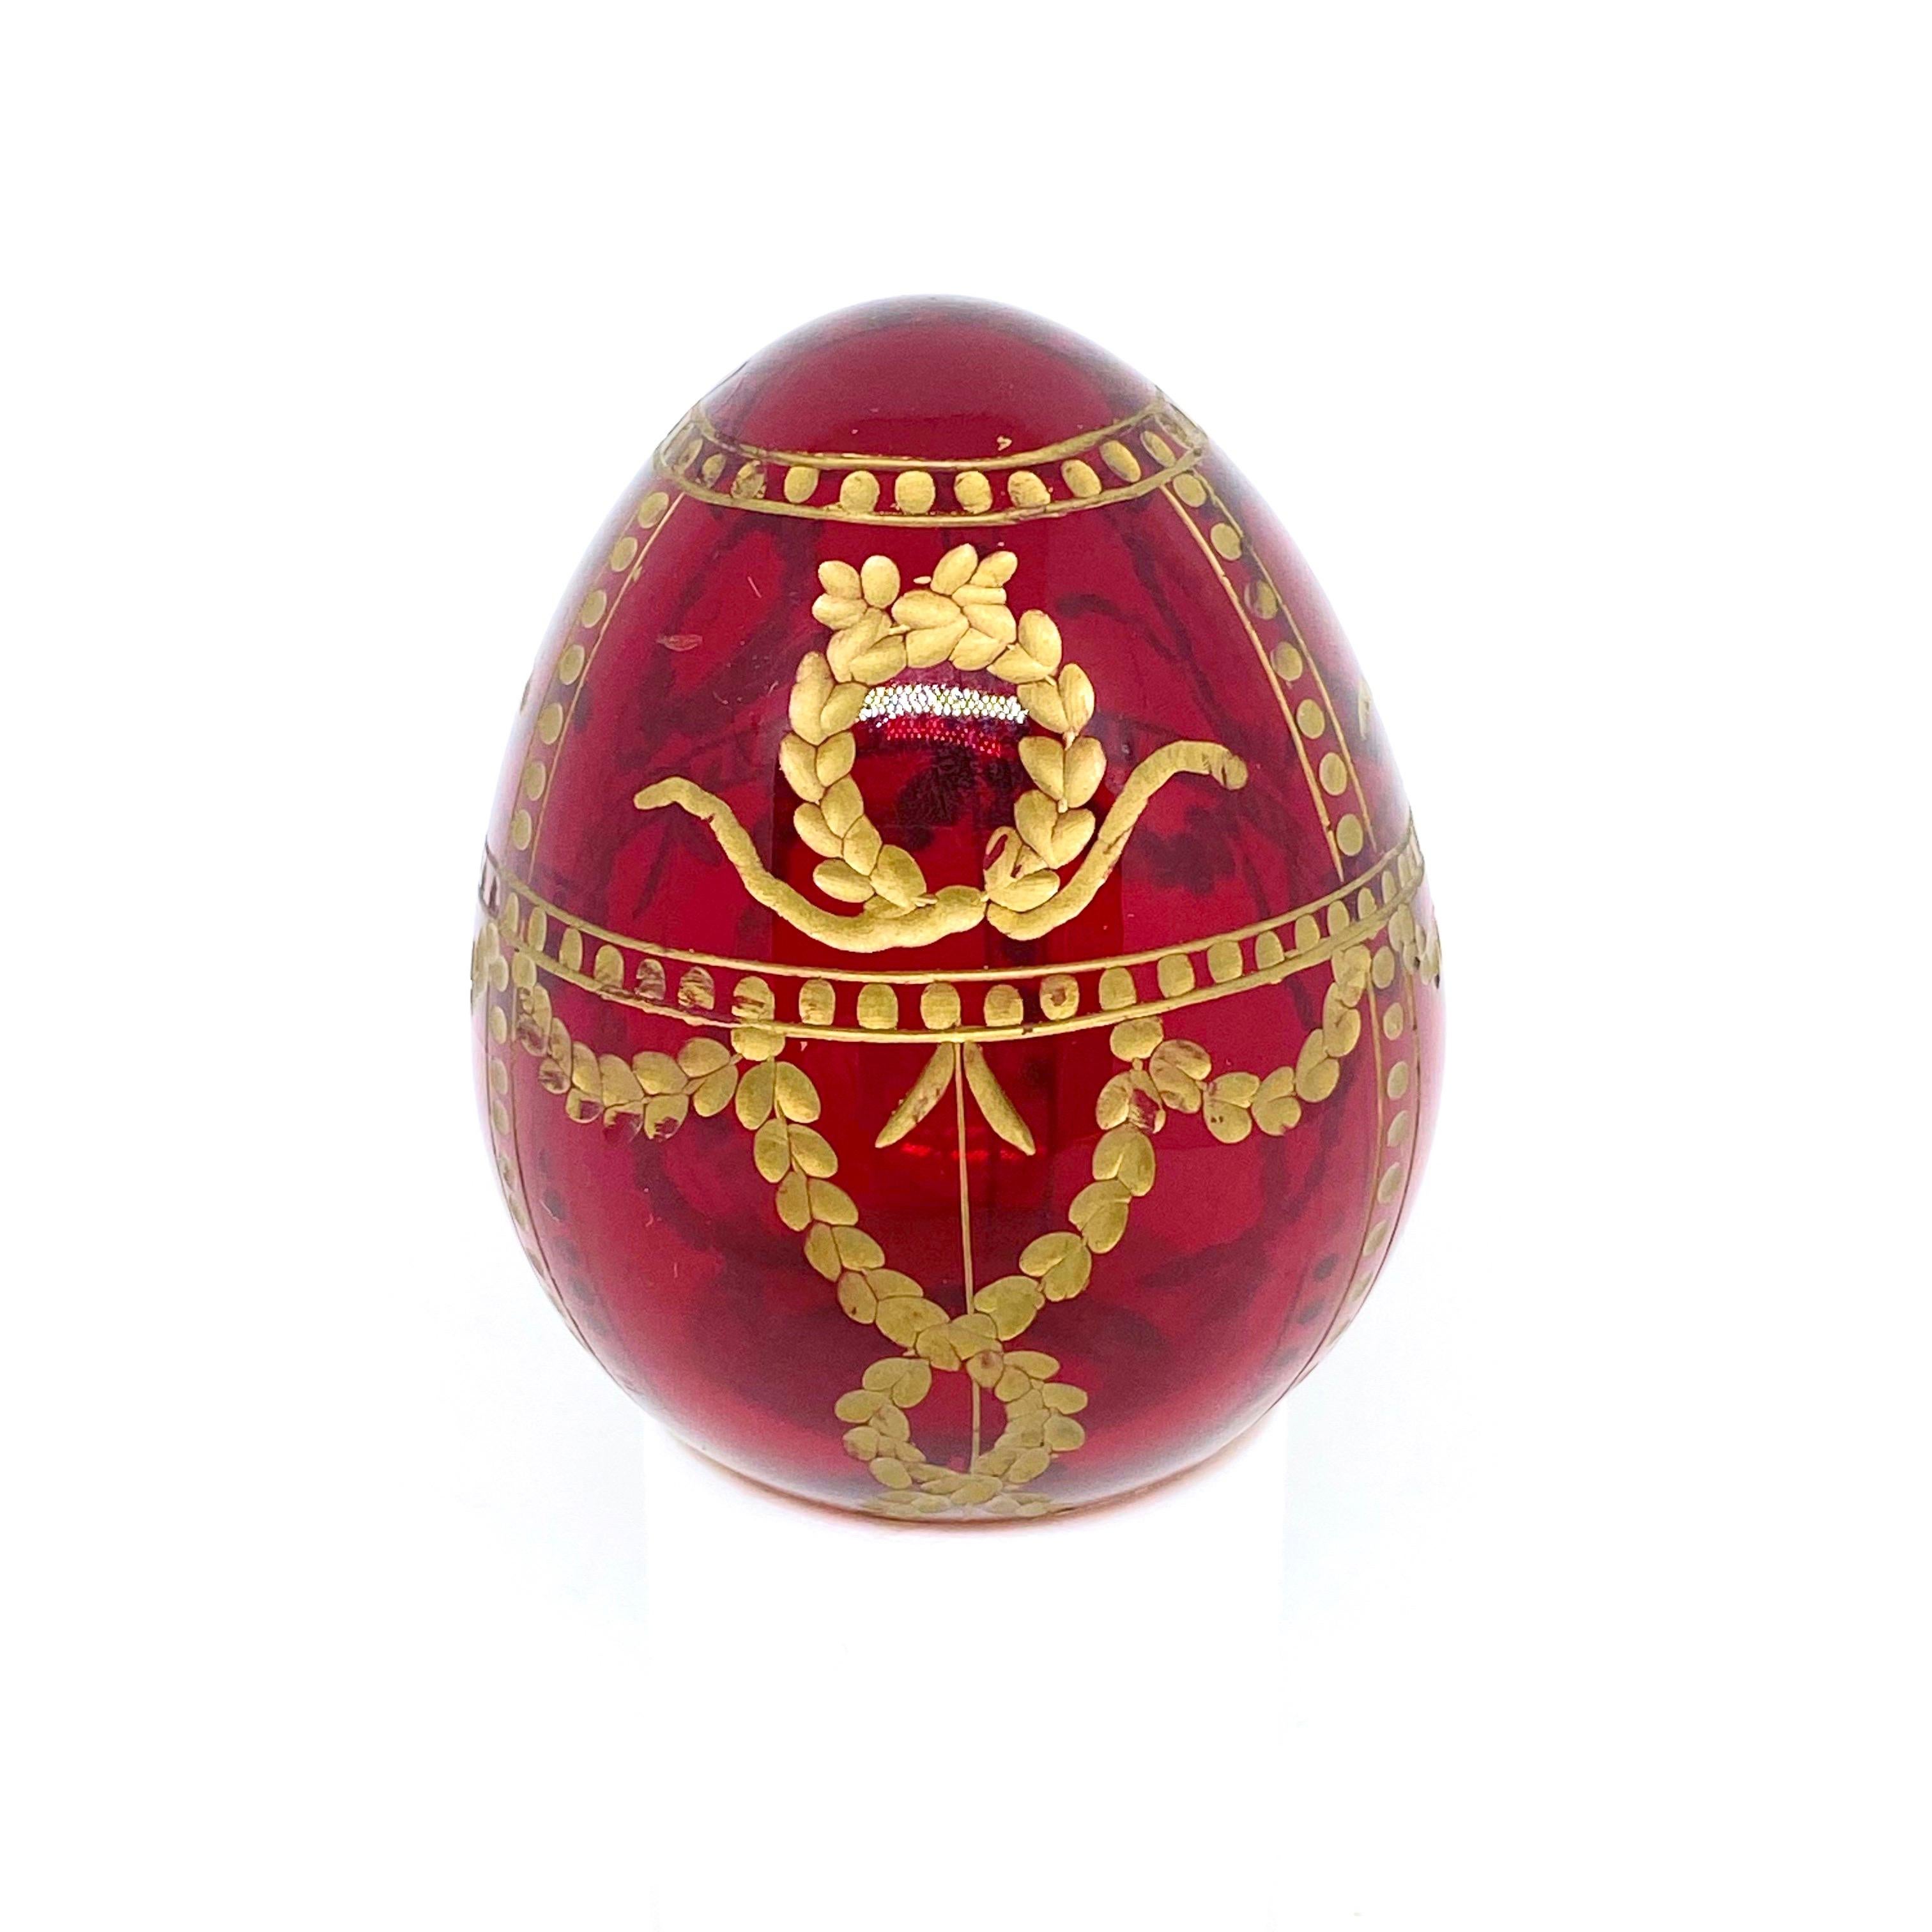 antique glass eggs